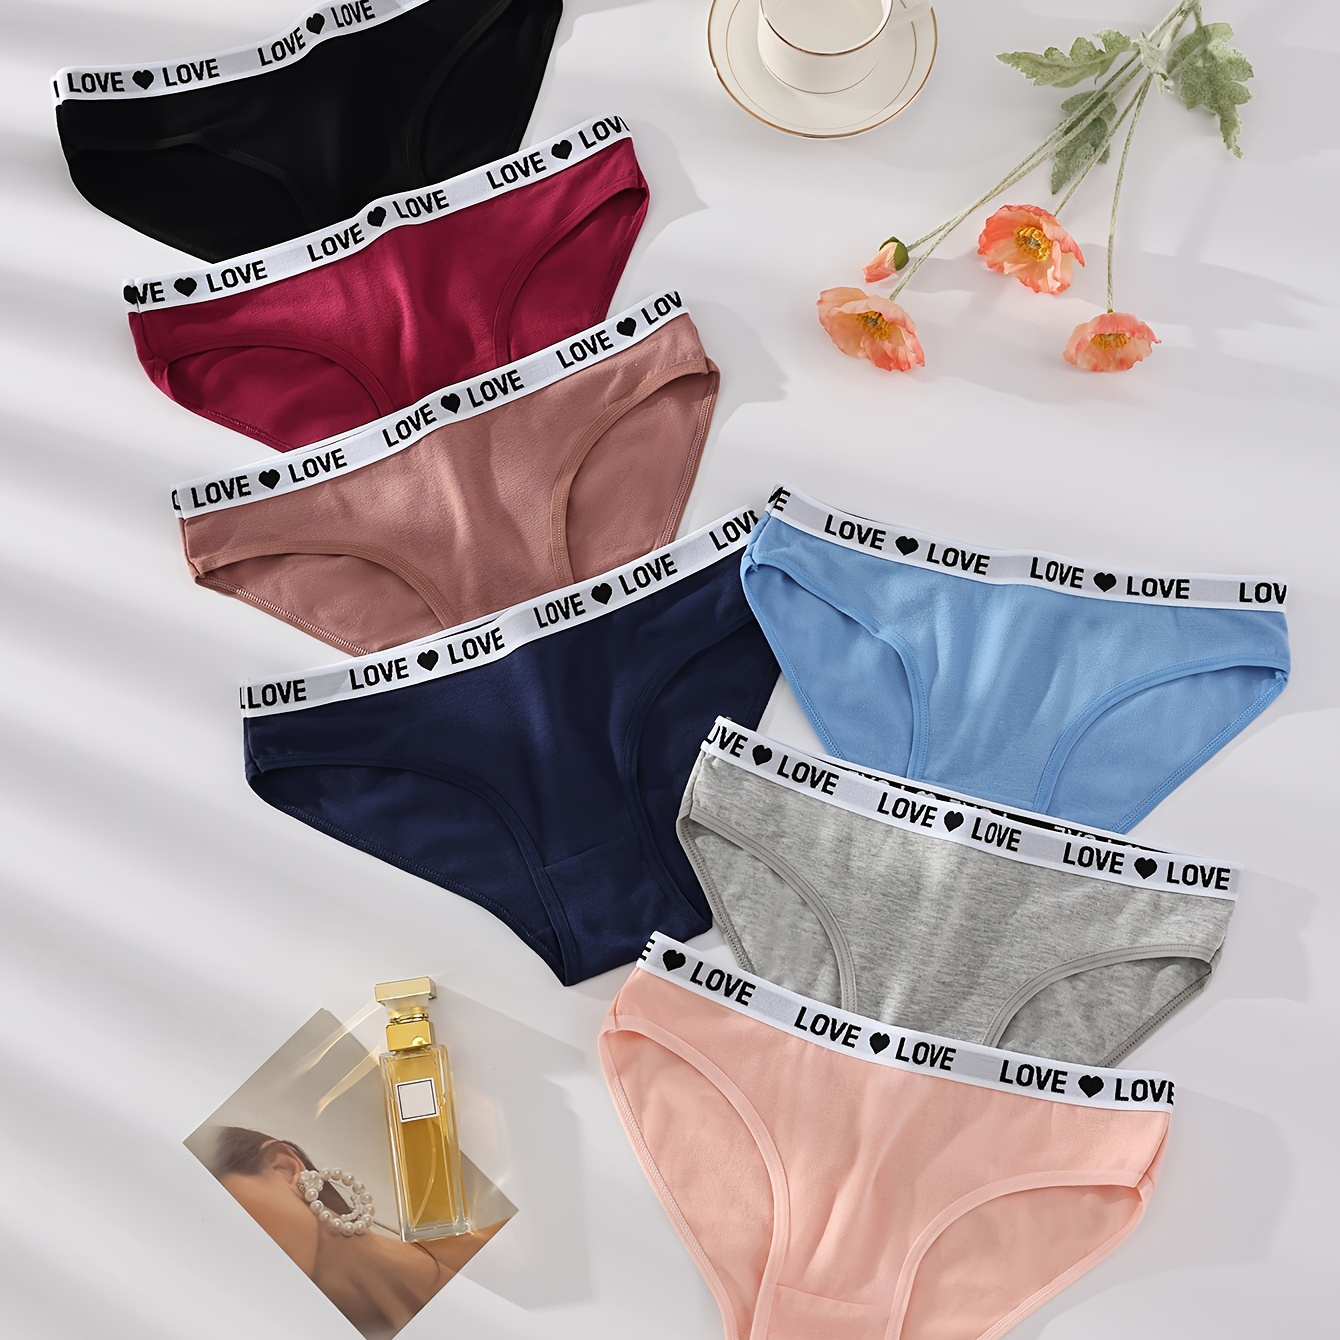 

7pcs Love Letter Tape Panties, Breathable & Comfy Intimates Panties, Women's Lingerie & Underwear